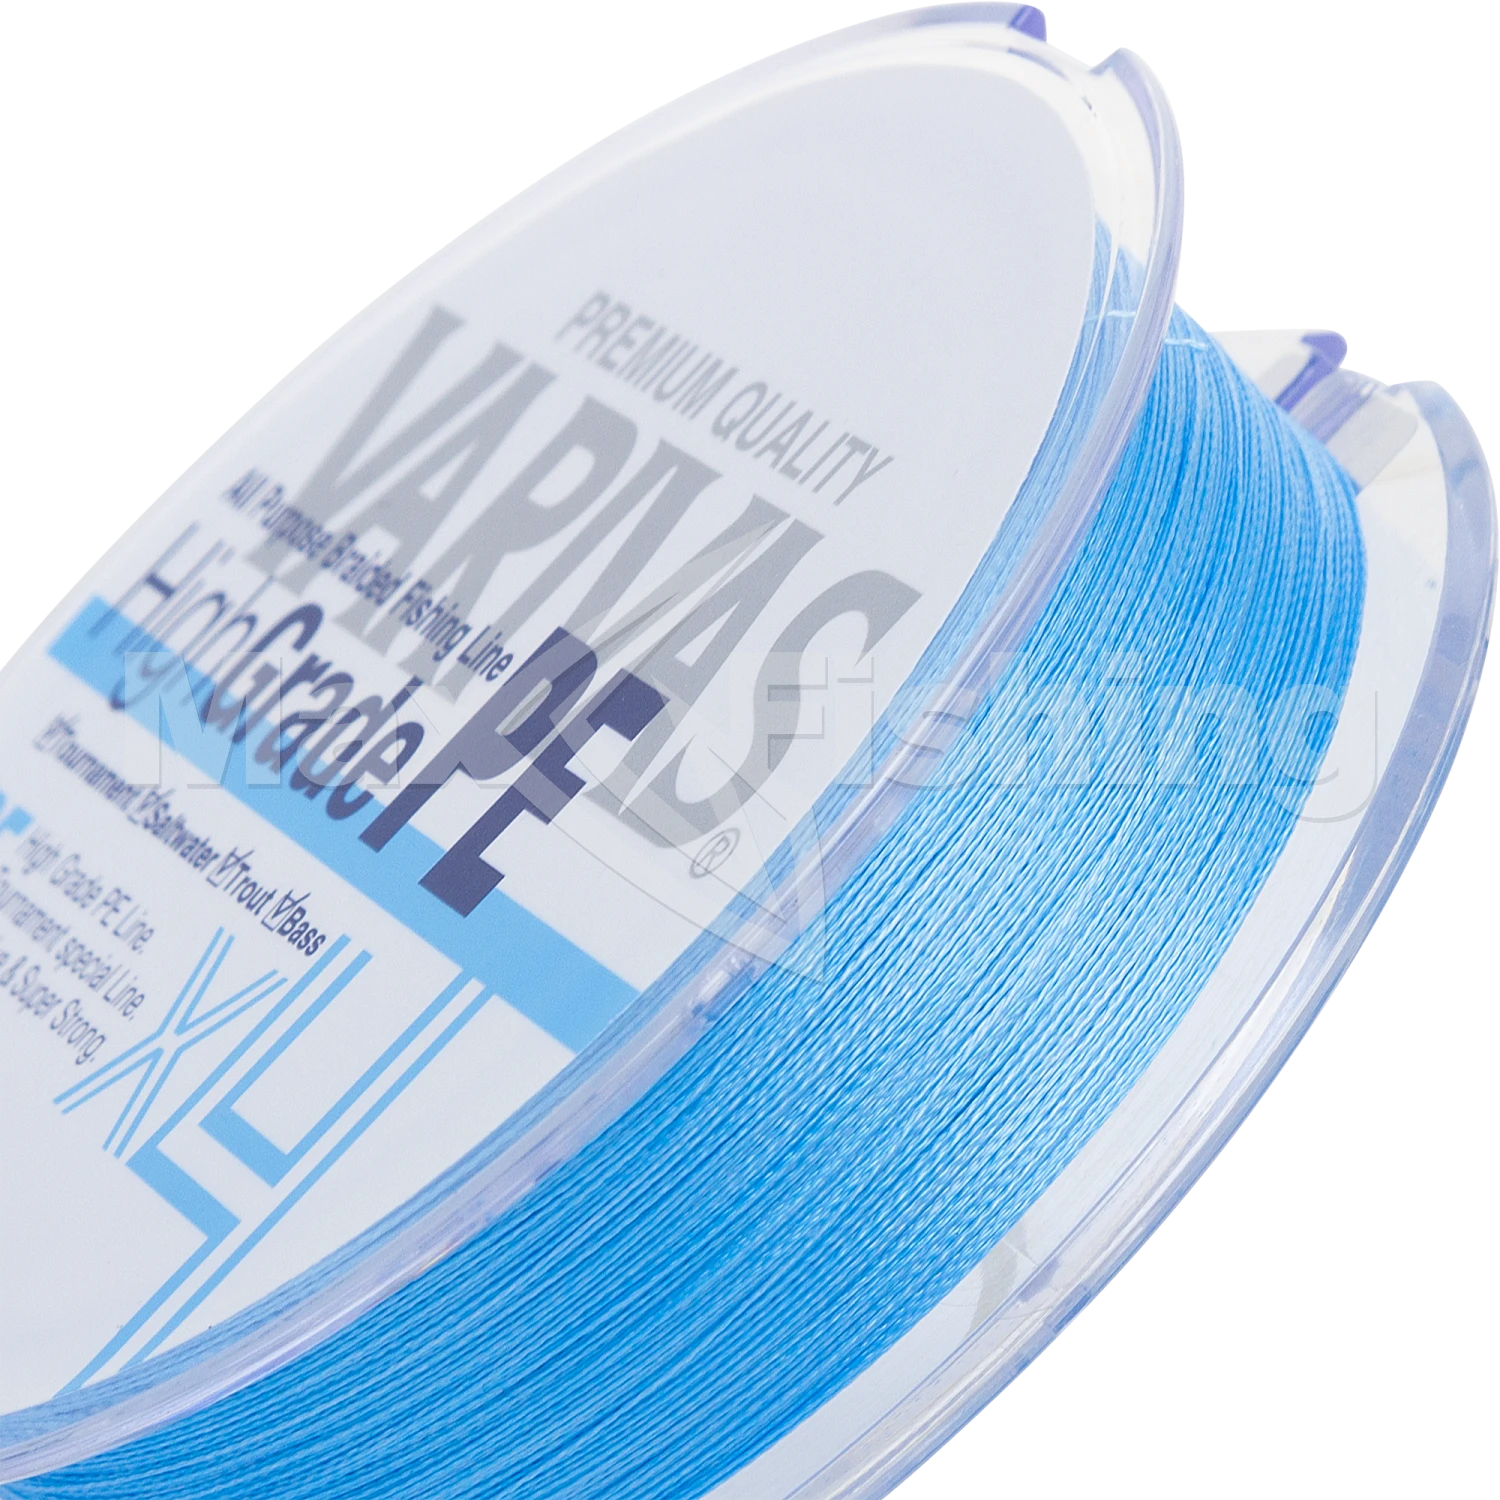 Шнур плетеный Varivas High Grade PE X4 #1,5 0,205мм 150м (water blue)